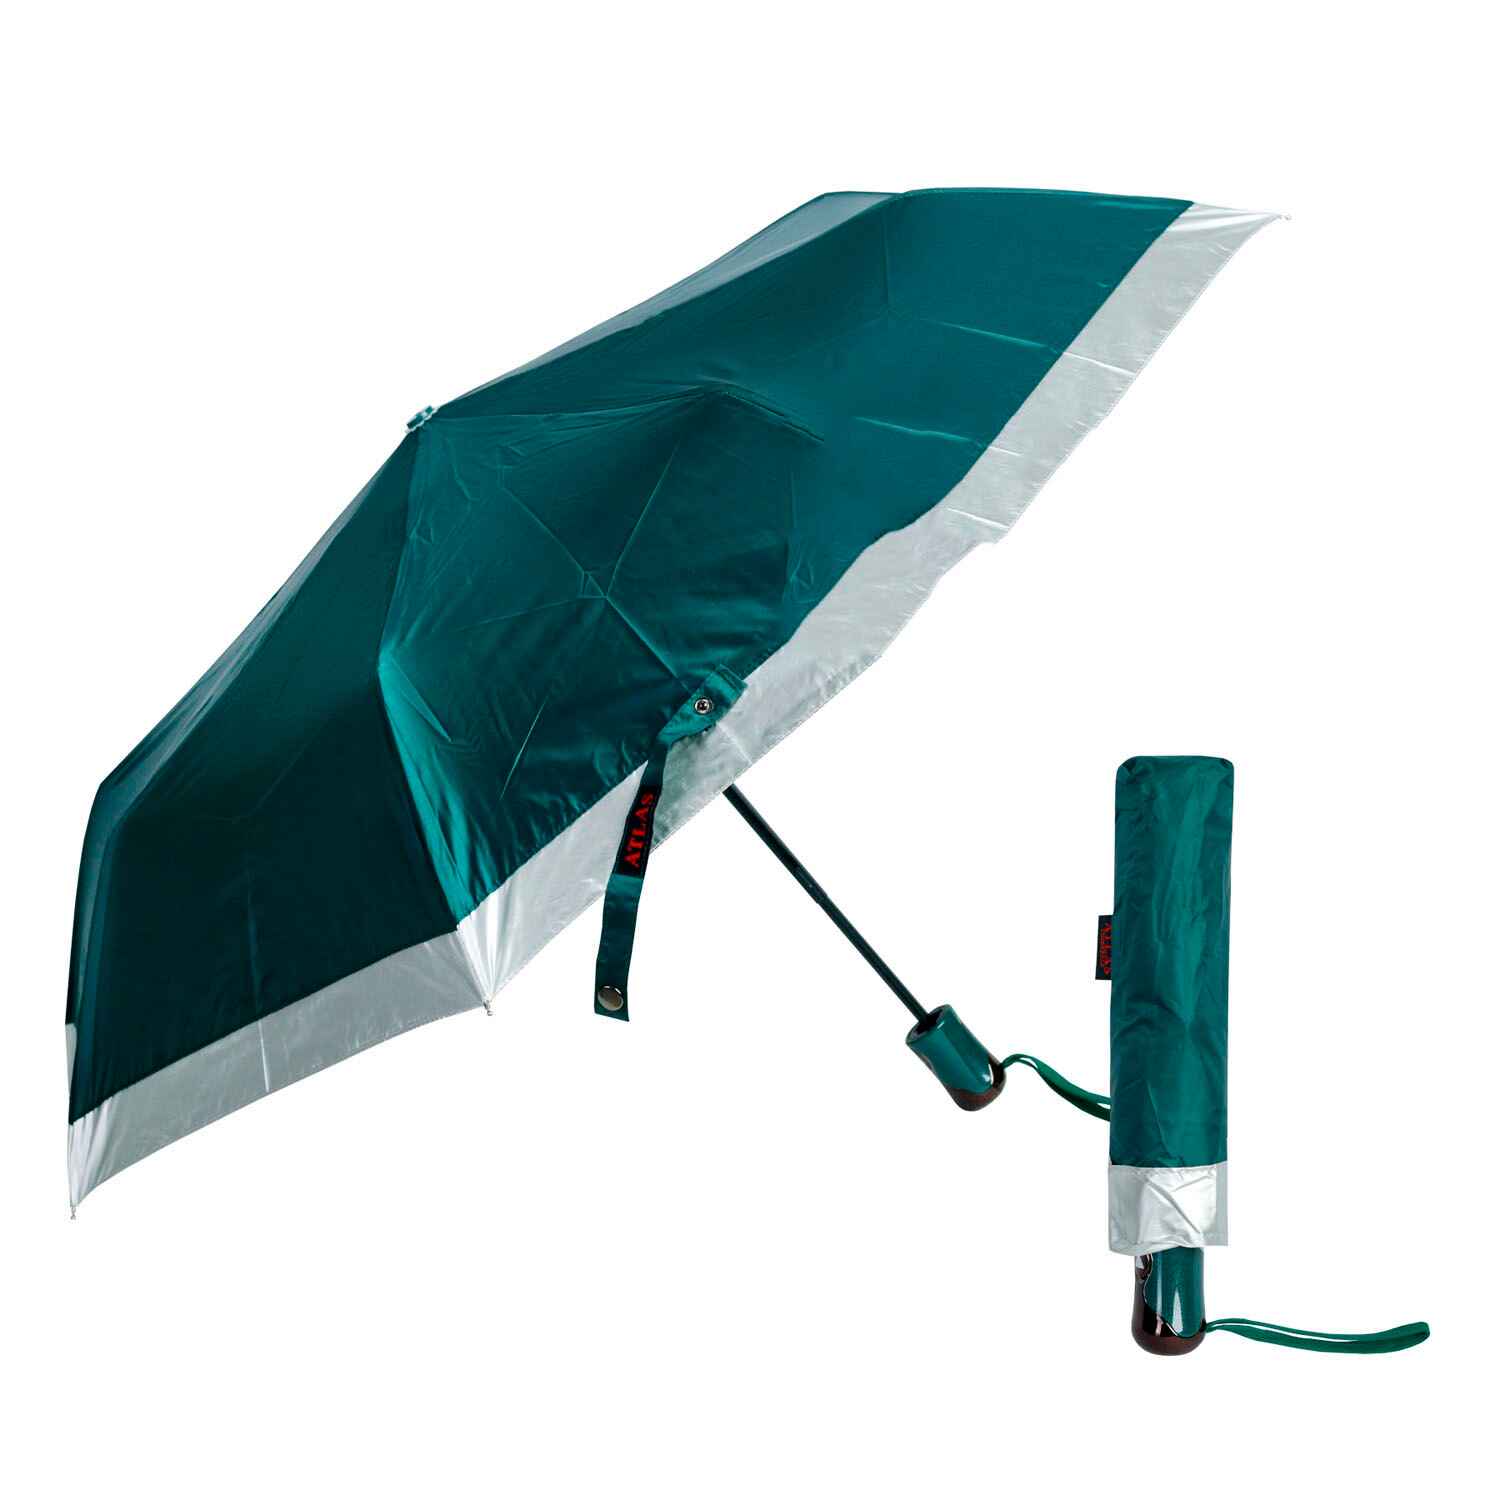 Original Sankar Auto Open 8 Ribs Heavy Duty Umbrella With Cover (3)